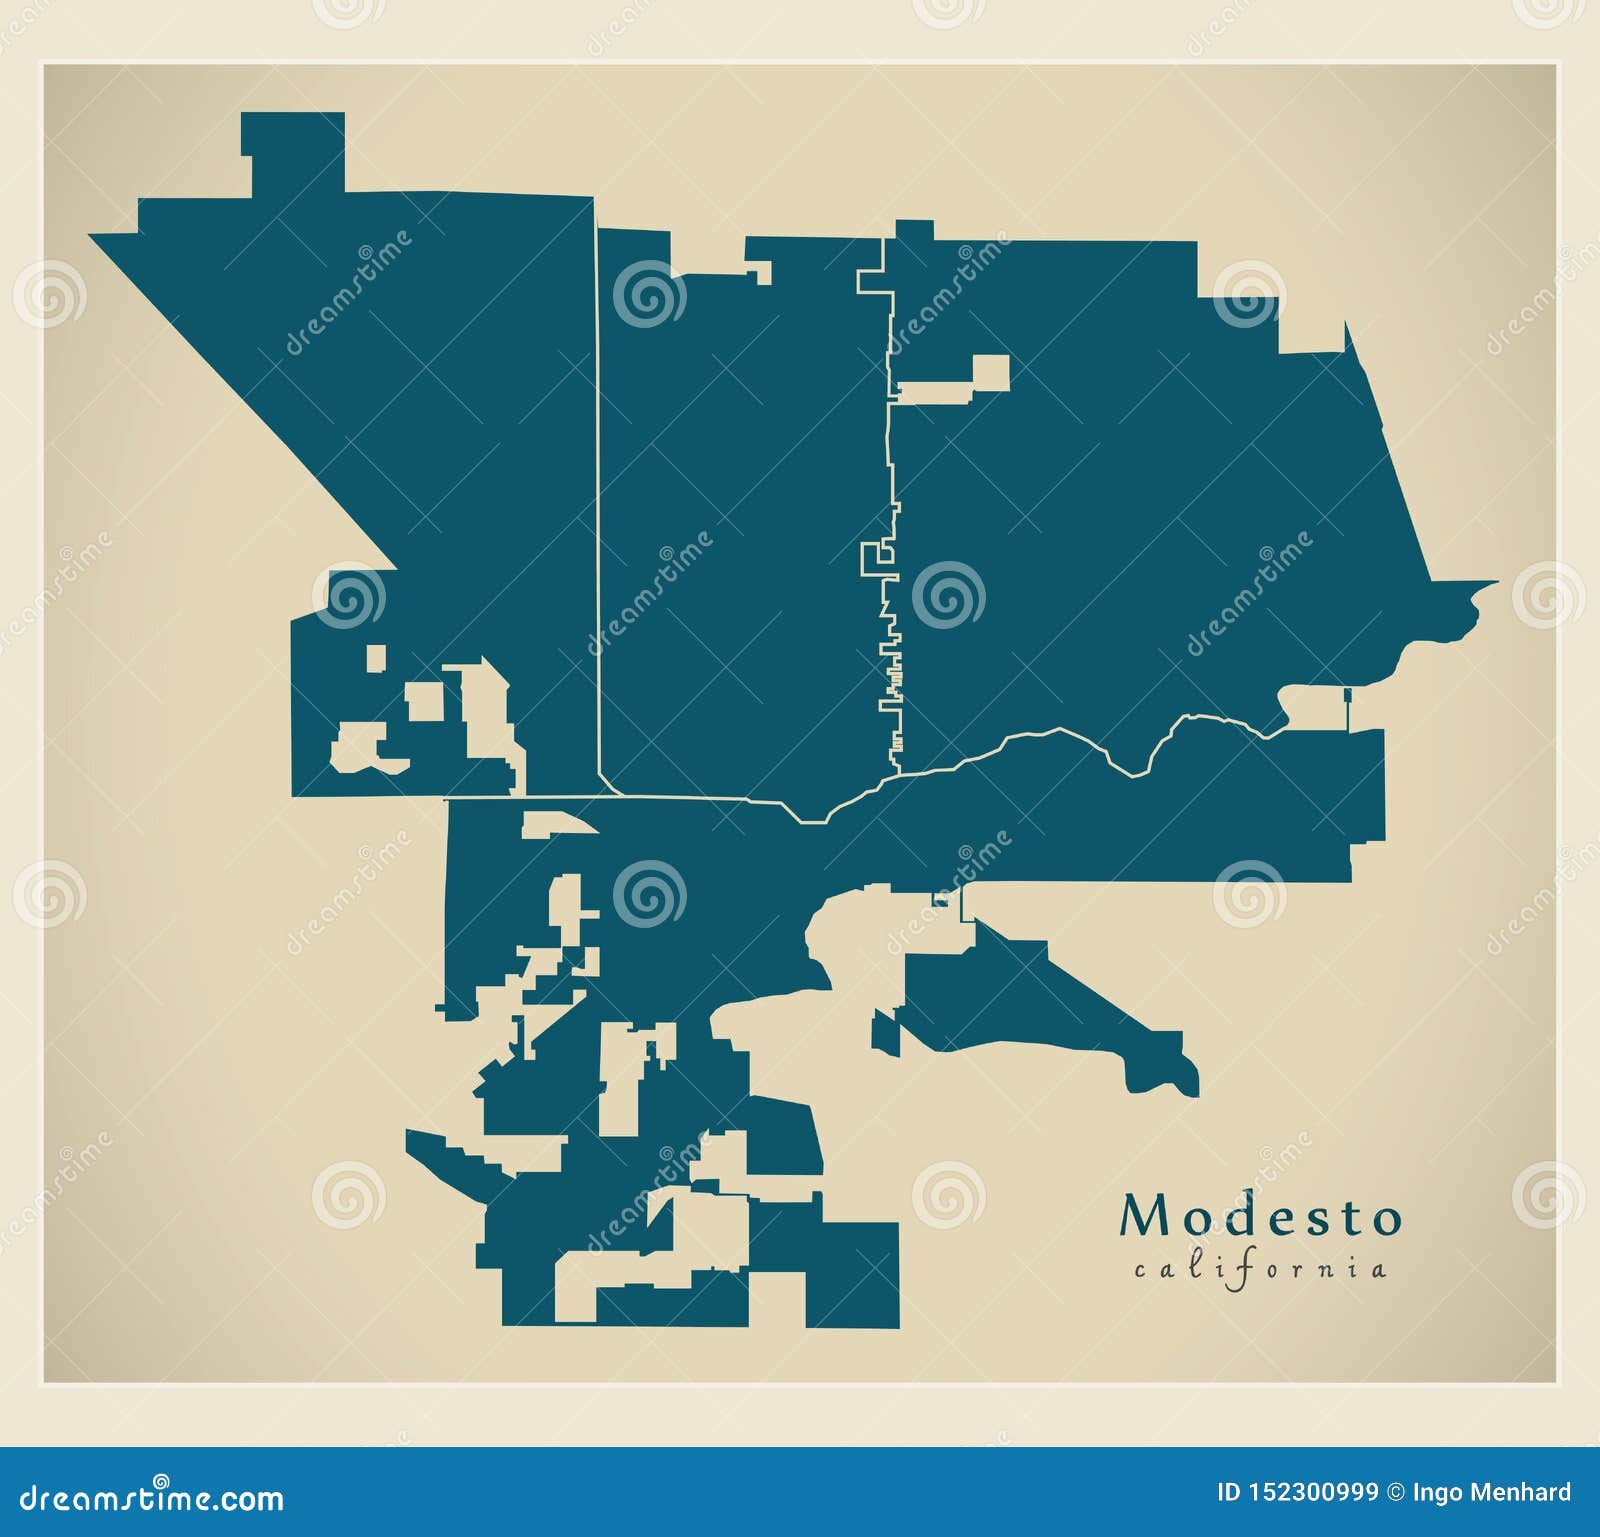 modern city map - modesto california city of the usa with neighborhoods